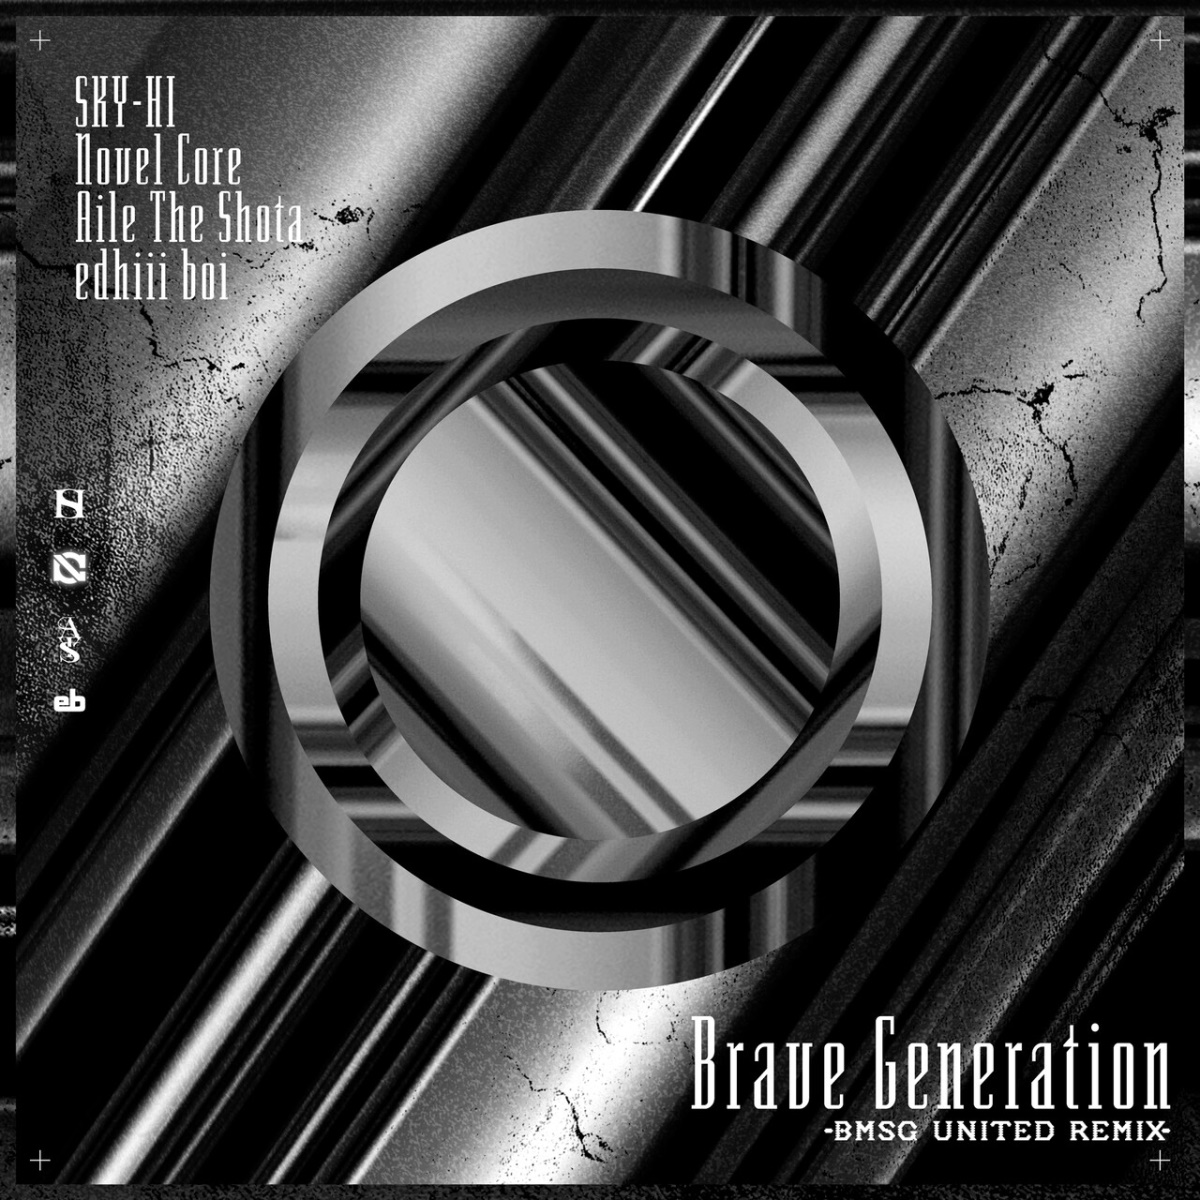 『SKY-HI, Novel Core, Aile The Shota, edhiii boi - Brave Generation -BMSG United Remix- 歌詞』収録の『Brave Generation -BMSG United Remix-』ジャケット